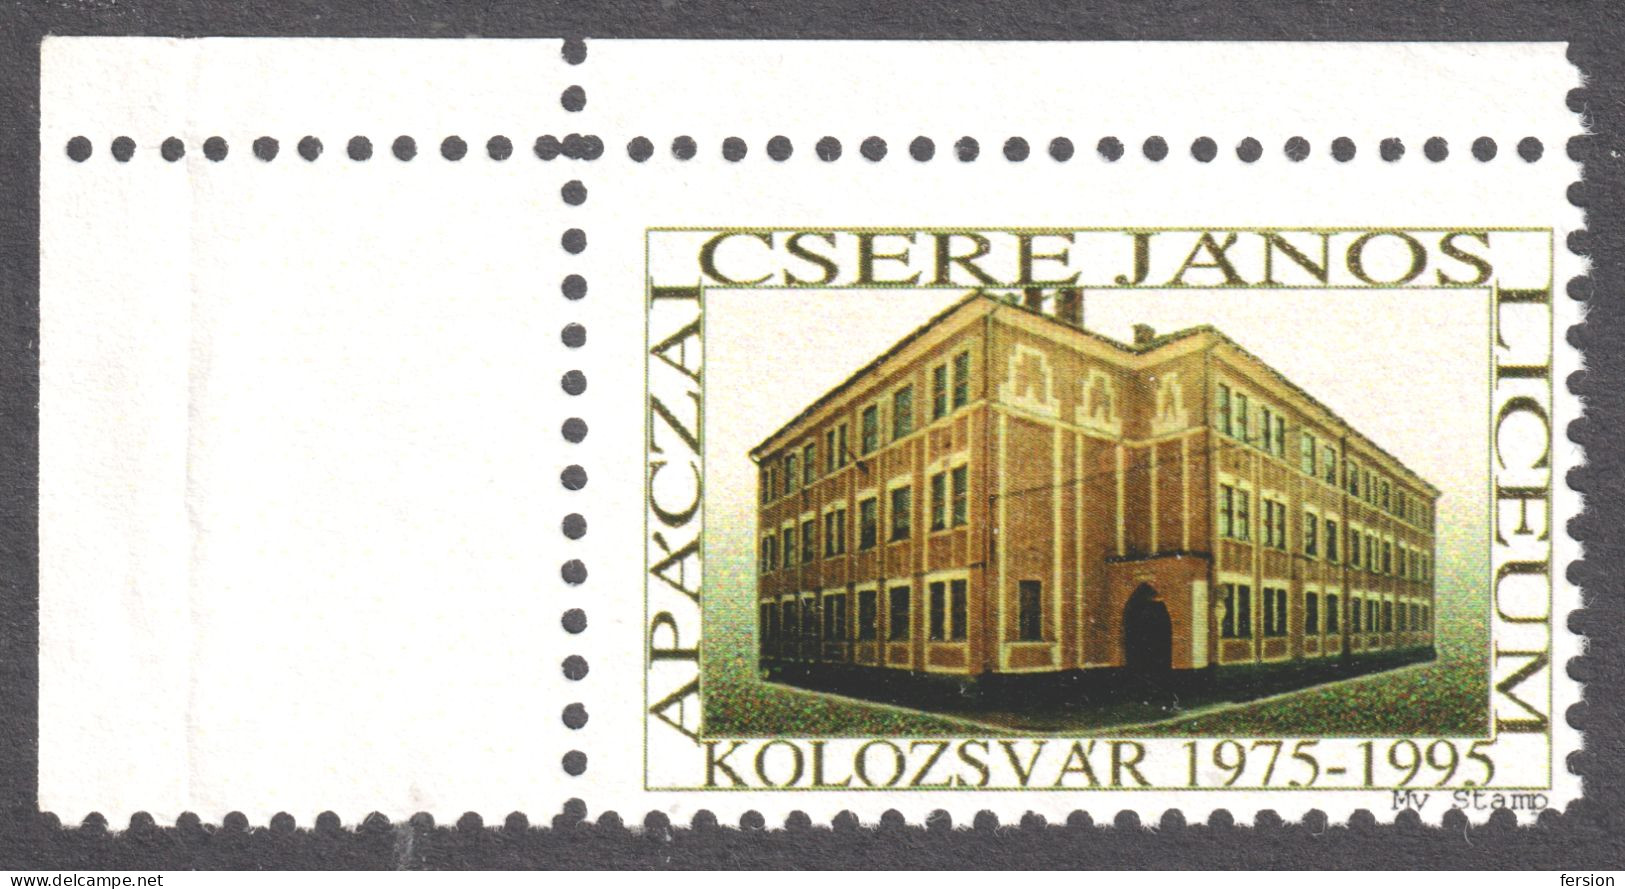 Transylvania Erdély Liceul Apaczai Csere Janos CLUJ Kolozsvár LICEUM LABEL CINDERELLA VIGNETTE 1995 Hungary My Stamp - Transylvania